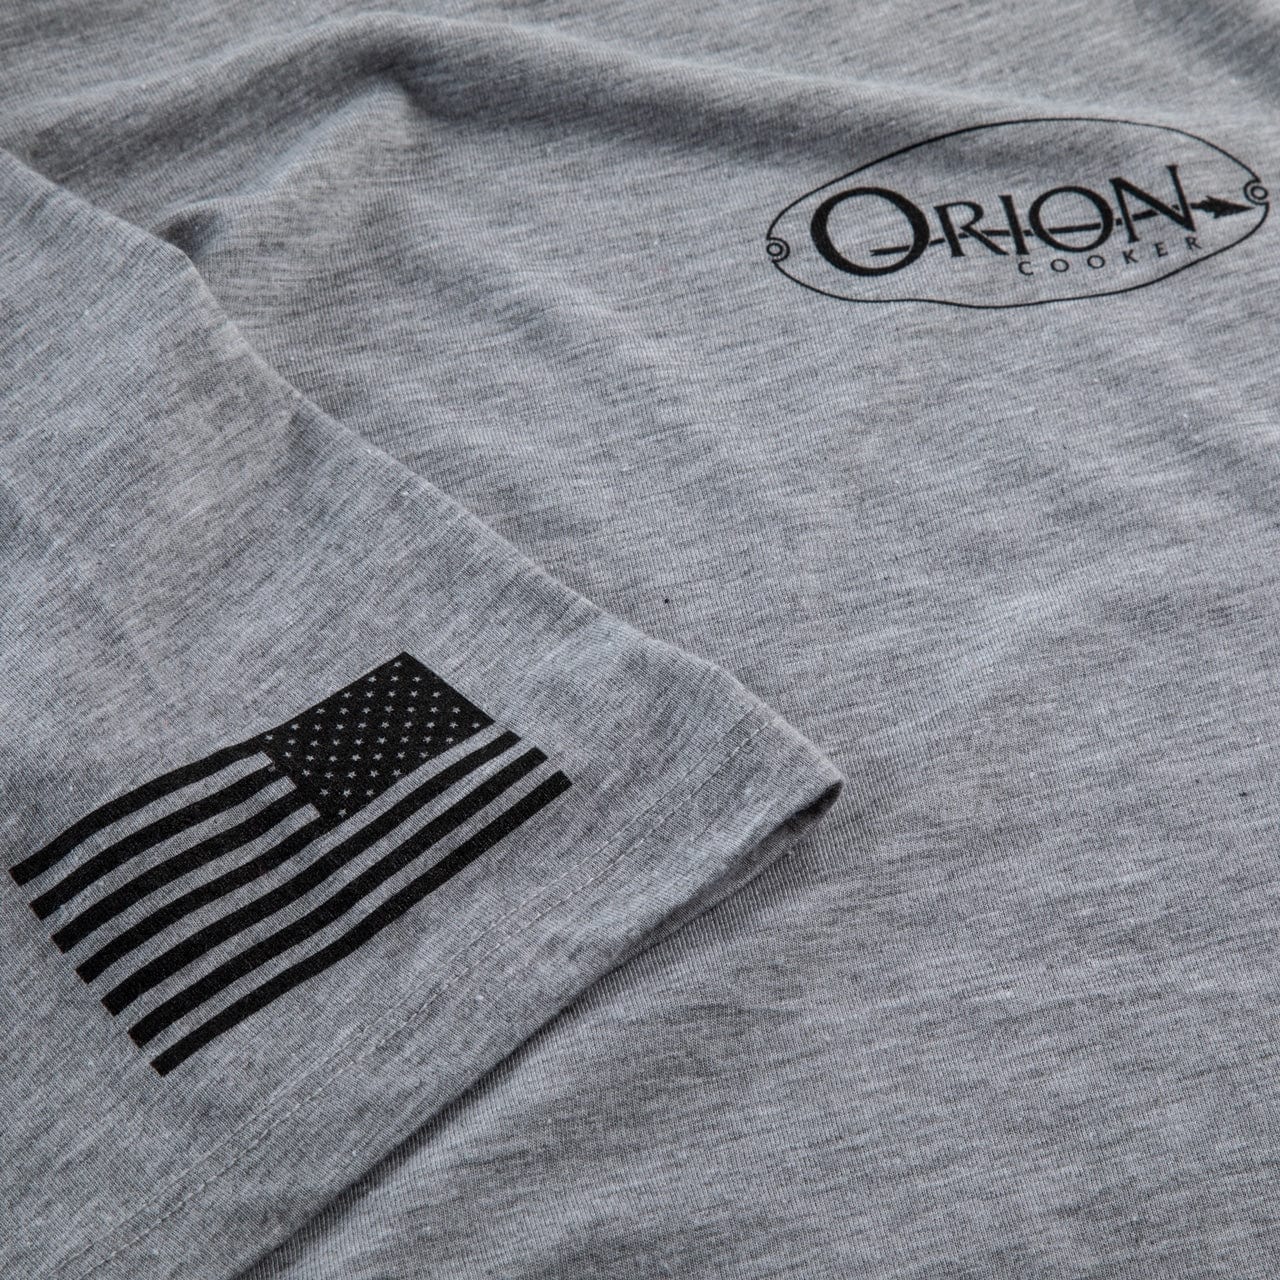 Tri Blend Orion Cooker T-shirts